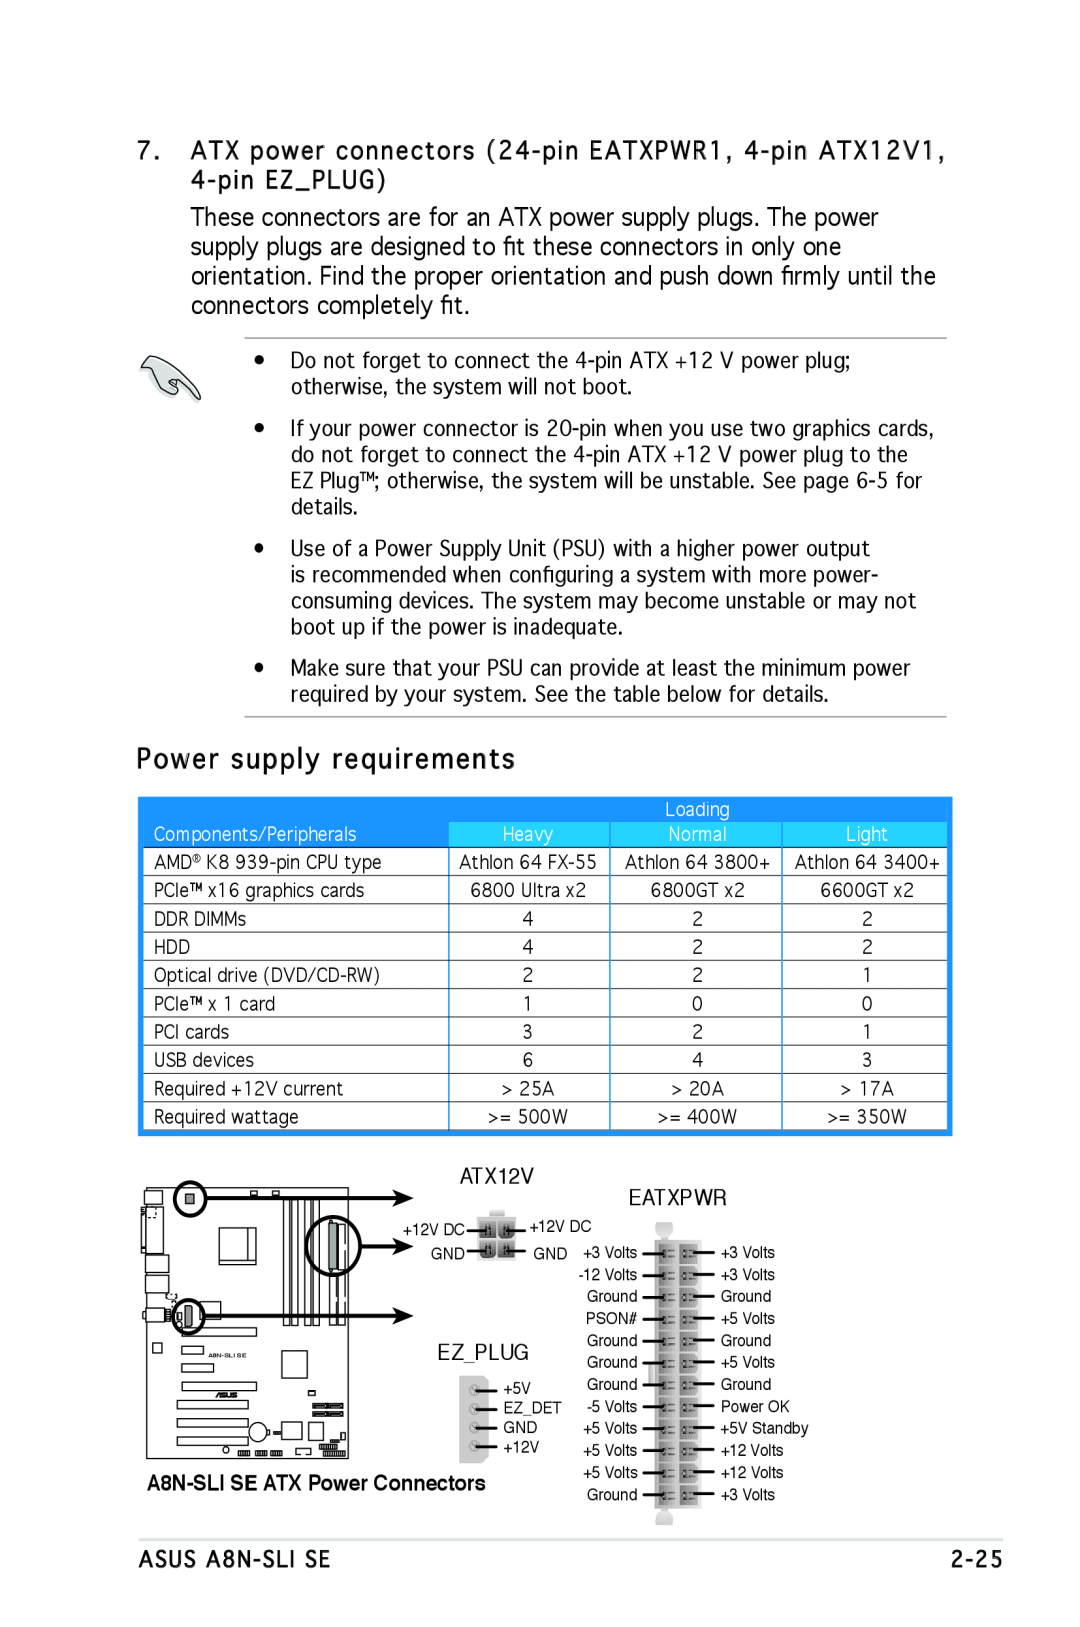 Asus A8N-SLI SE manual Power supply requirements, ATX power connectors 24-pin EATXPWR1,4-pin ATX12V1, 4-pin EZ PLUG 